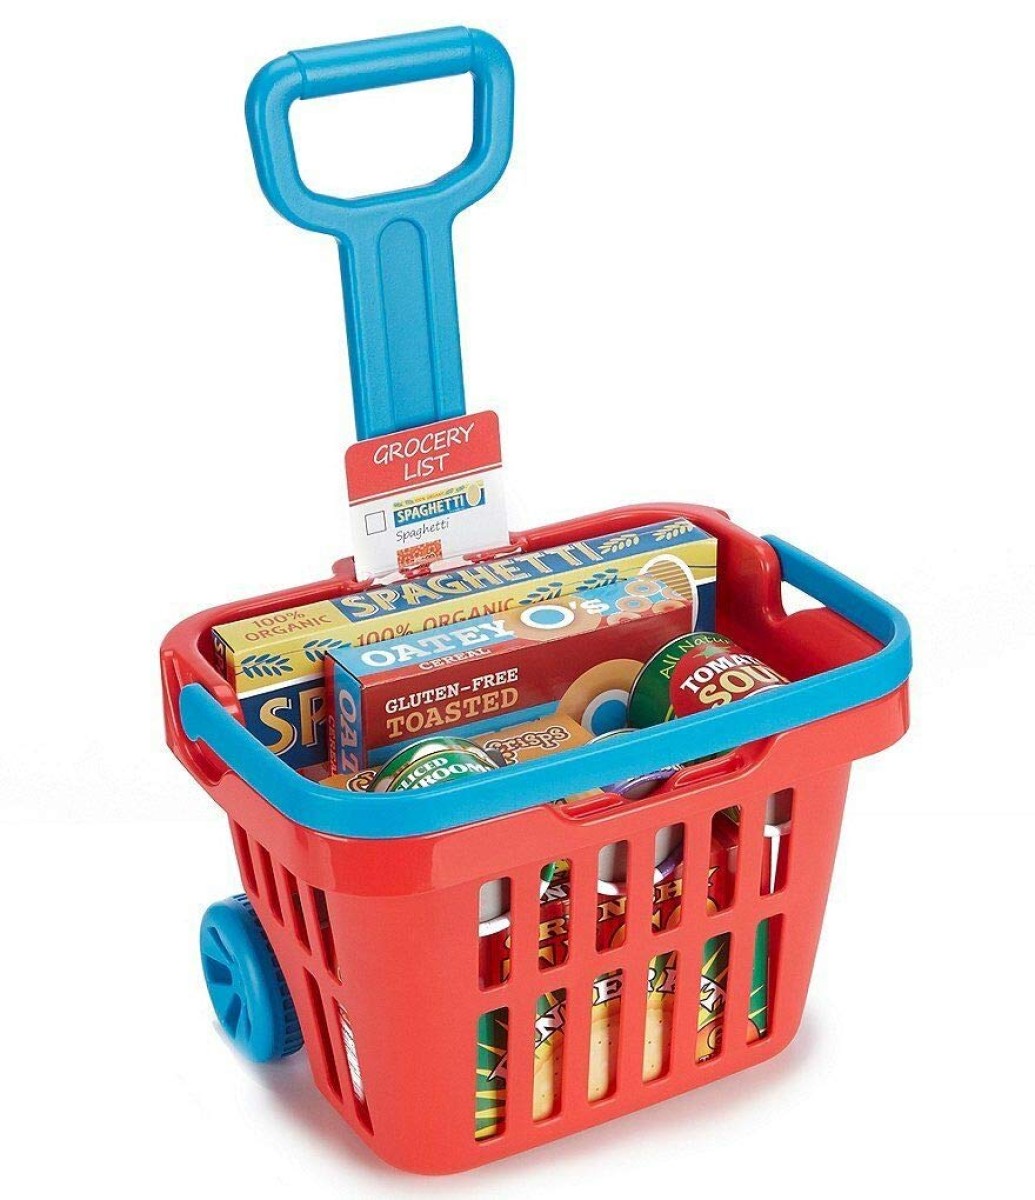 melissa & doug grocery shopping cart